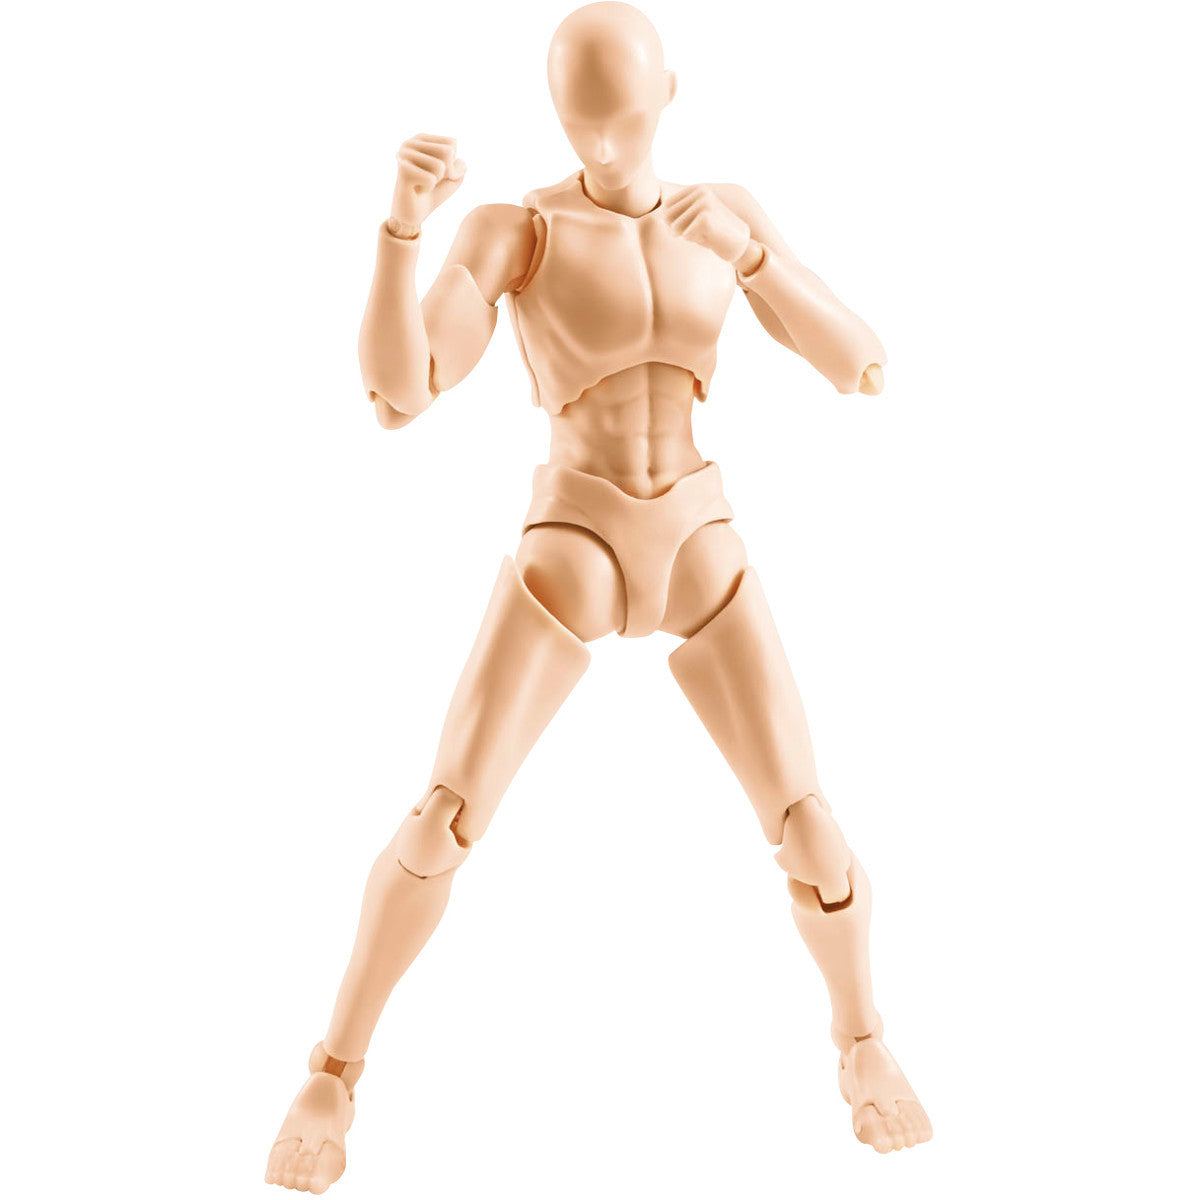 Bandai S.H.Figuarts Body-Kun (Solid Black Color Ver.), Figures & Dolls  Action Figures